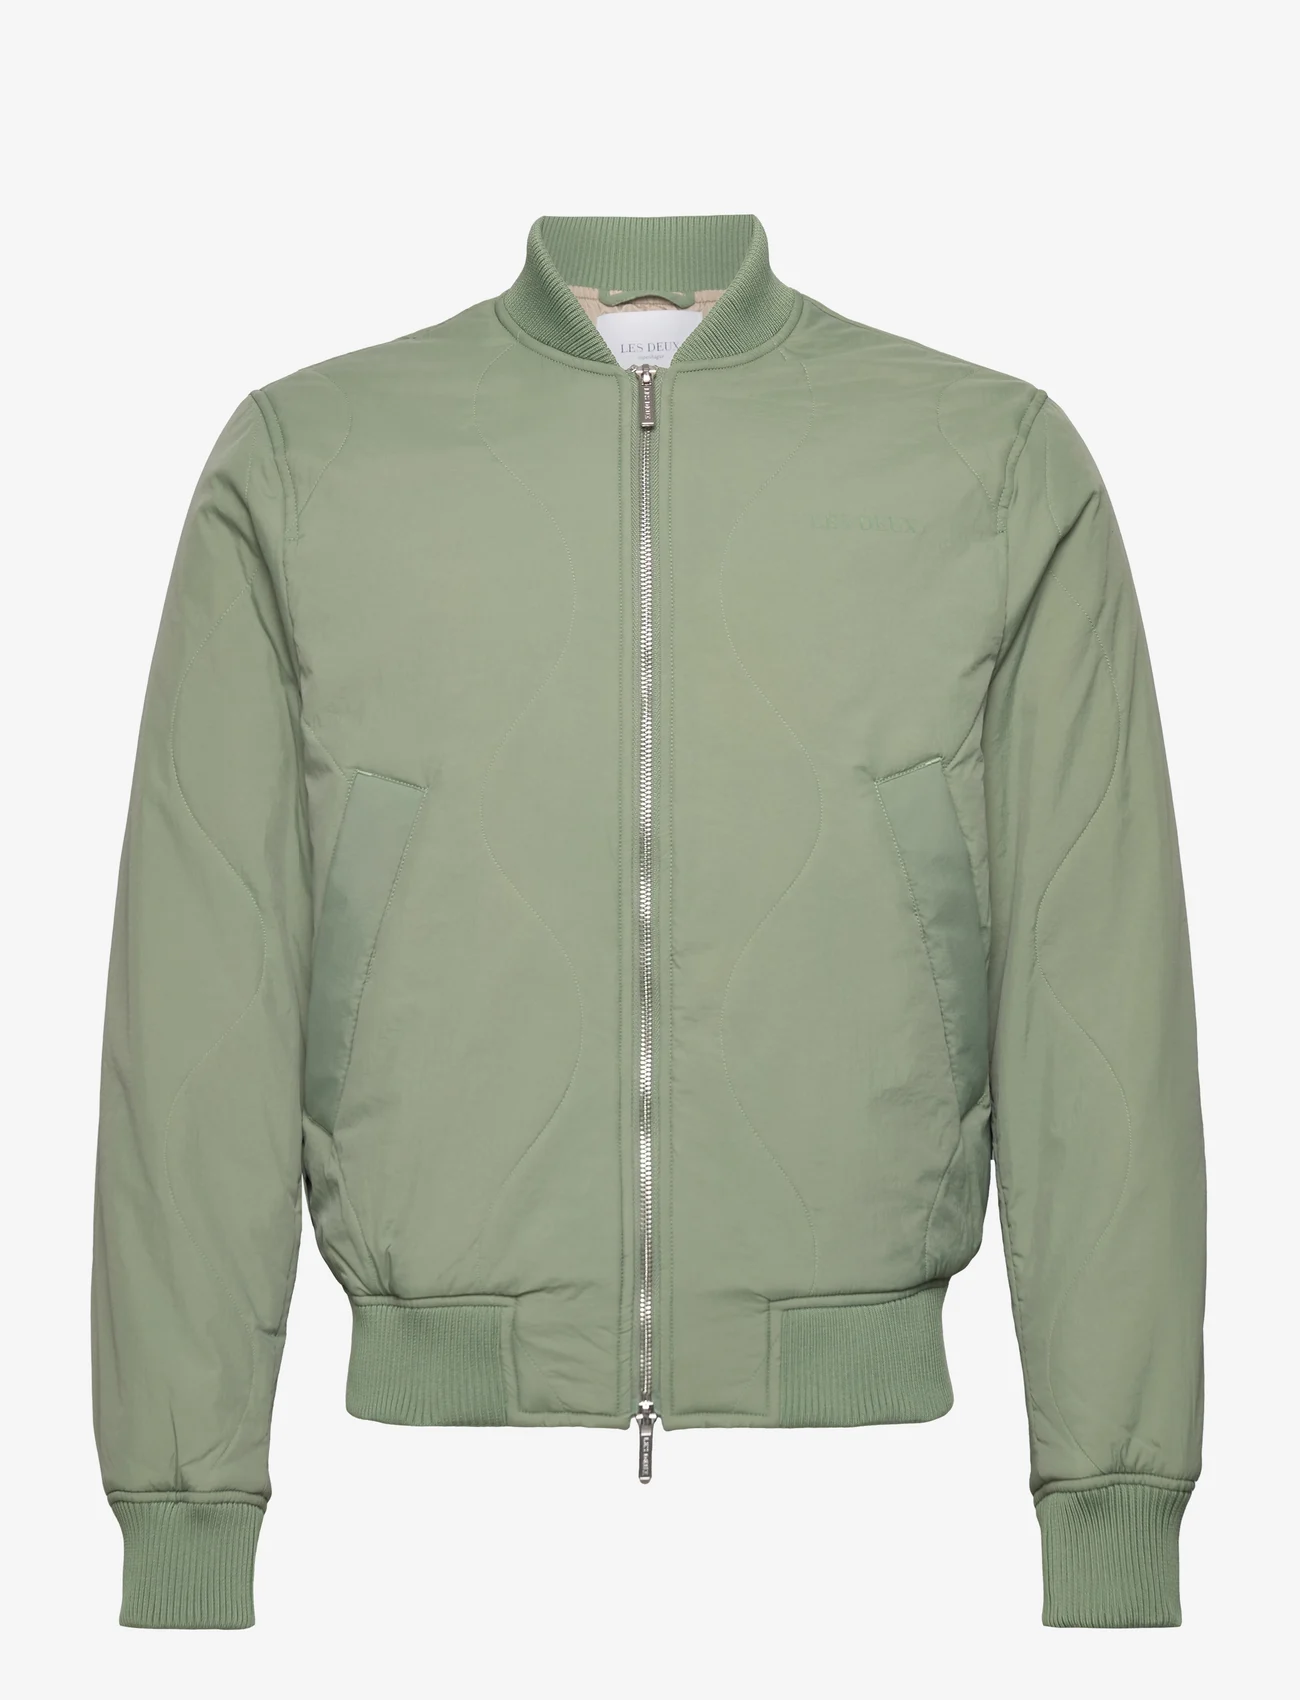 Les Deux - Norman Quilted Bomber Jacket - spring jackets - hegde green - 0